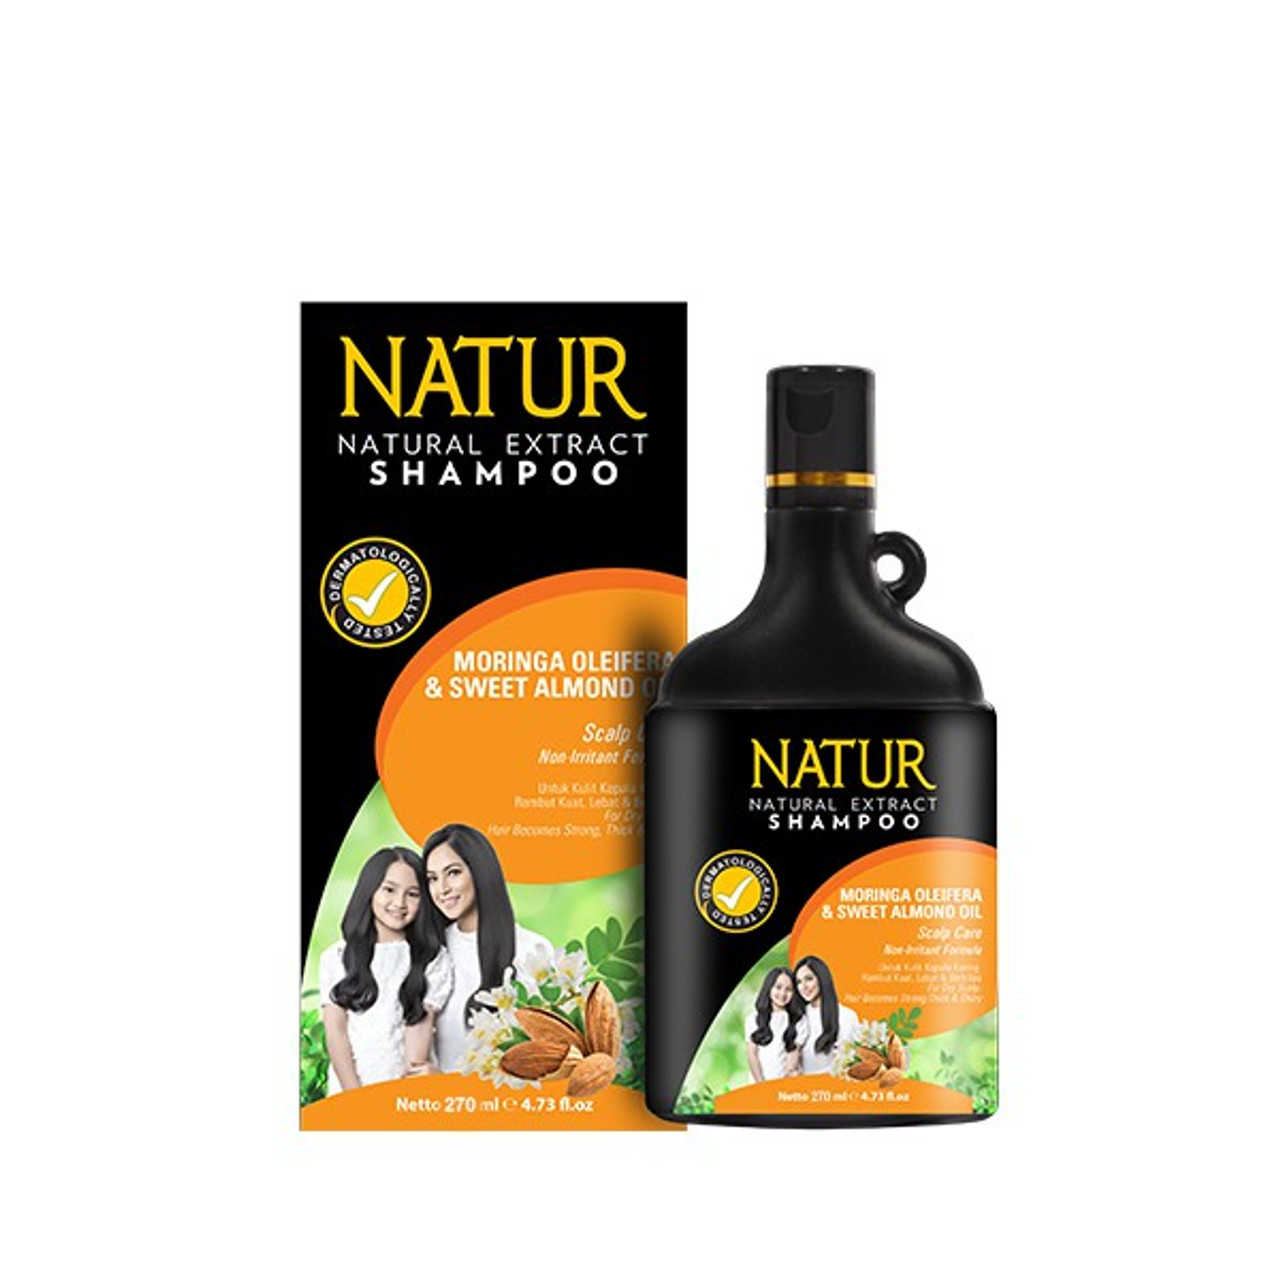 Natur Shampoo Moringa & Sweet Almond Oil 270ml